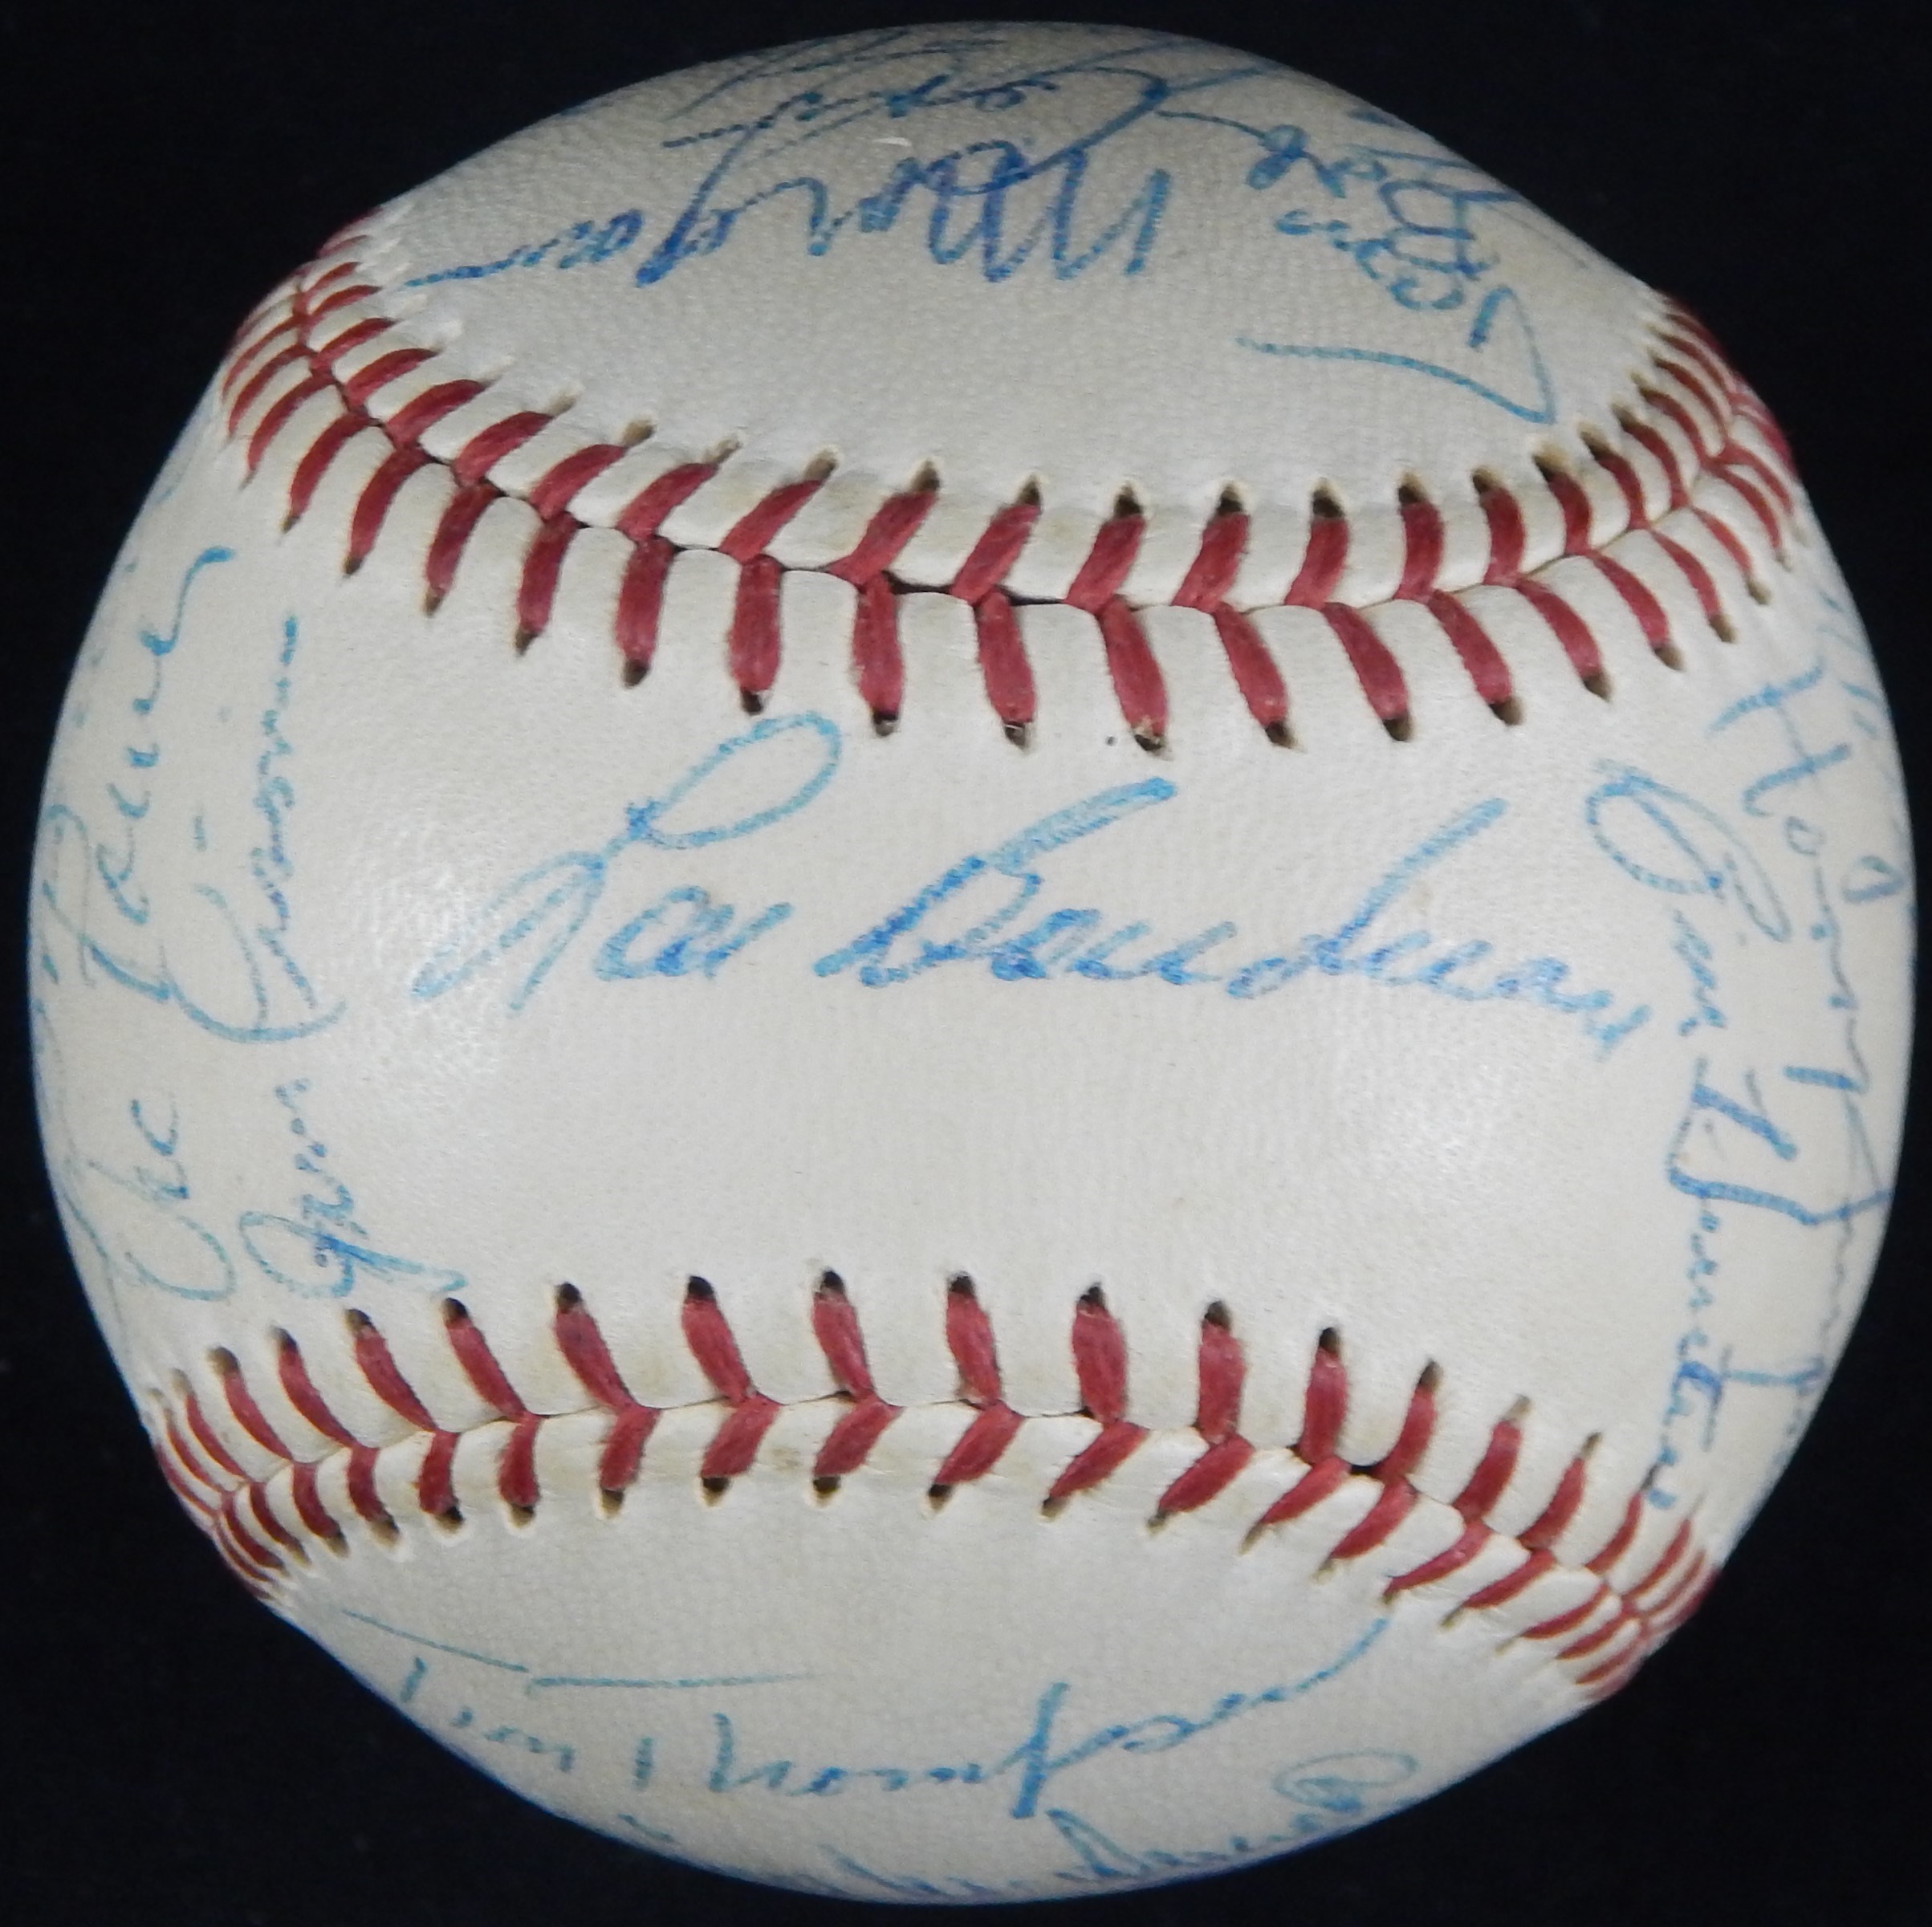 1957 Kansas City Athletics Team Signed Baseball - JSA LOA